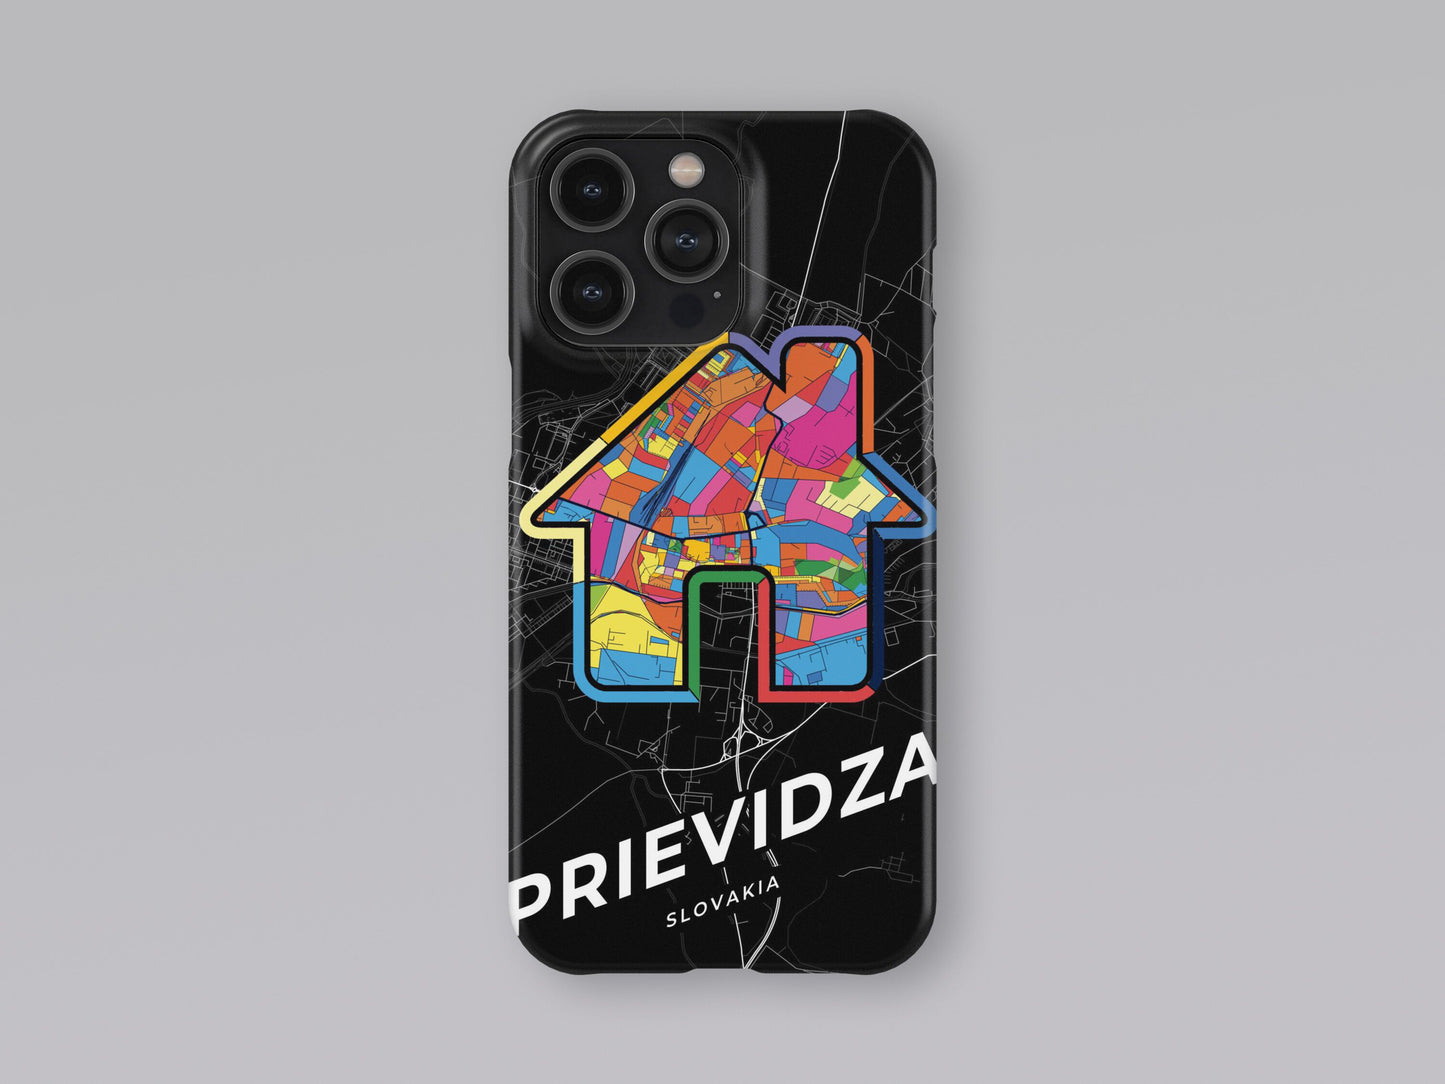 Prievidza Slovakia slim phone case with colorful icon. Birthday, wedding or housewarming gift. Couple match cases. 3